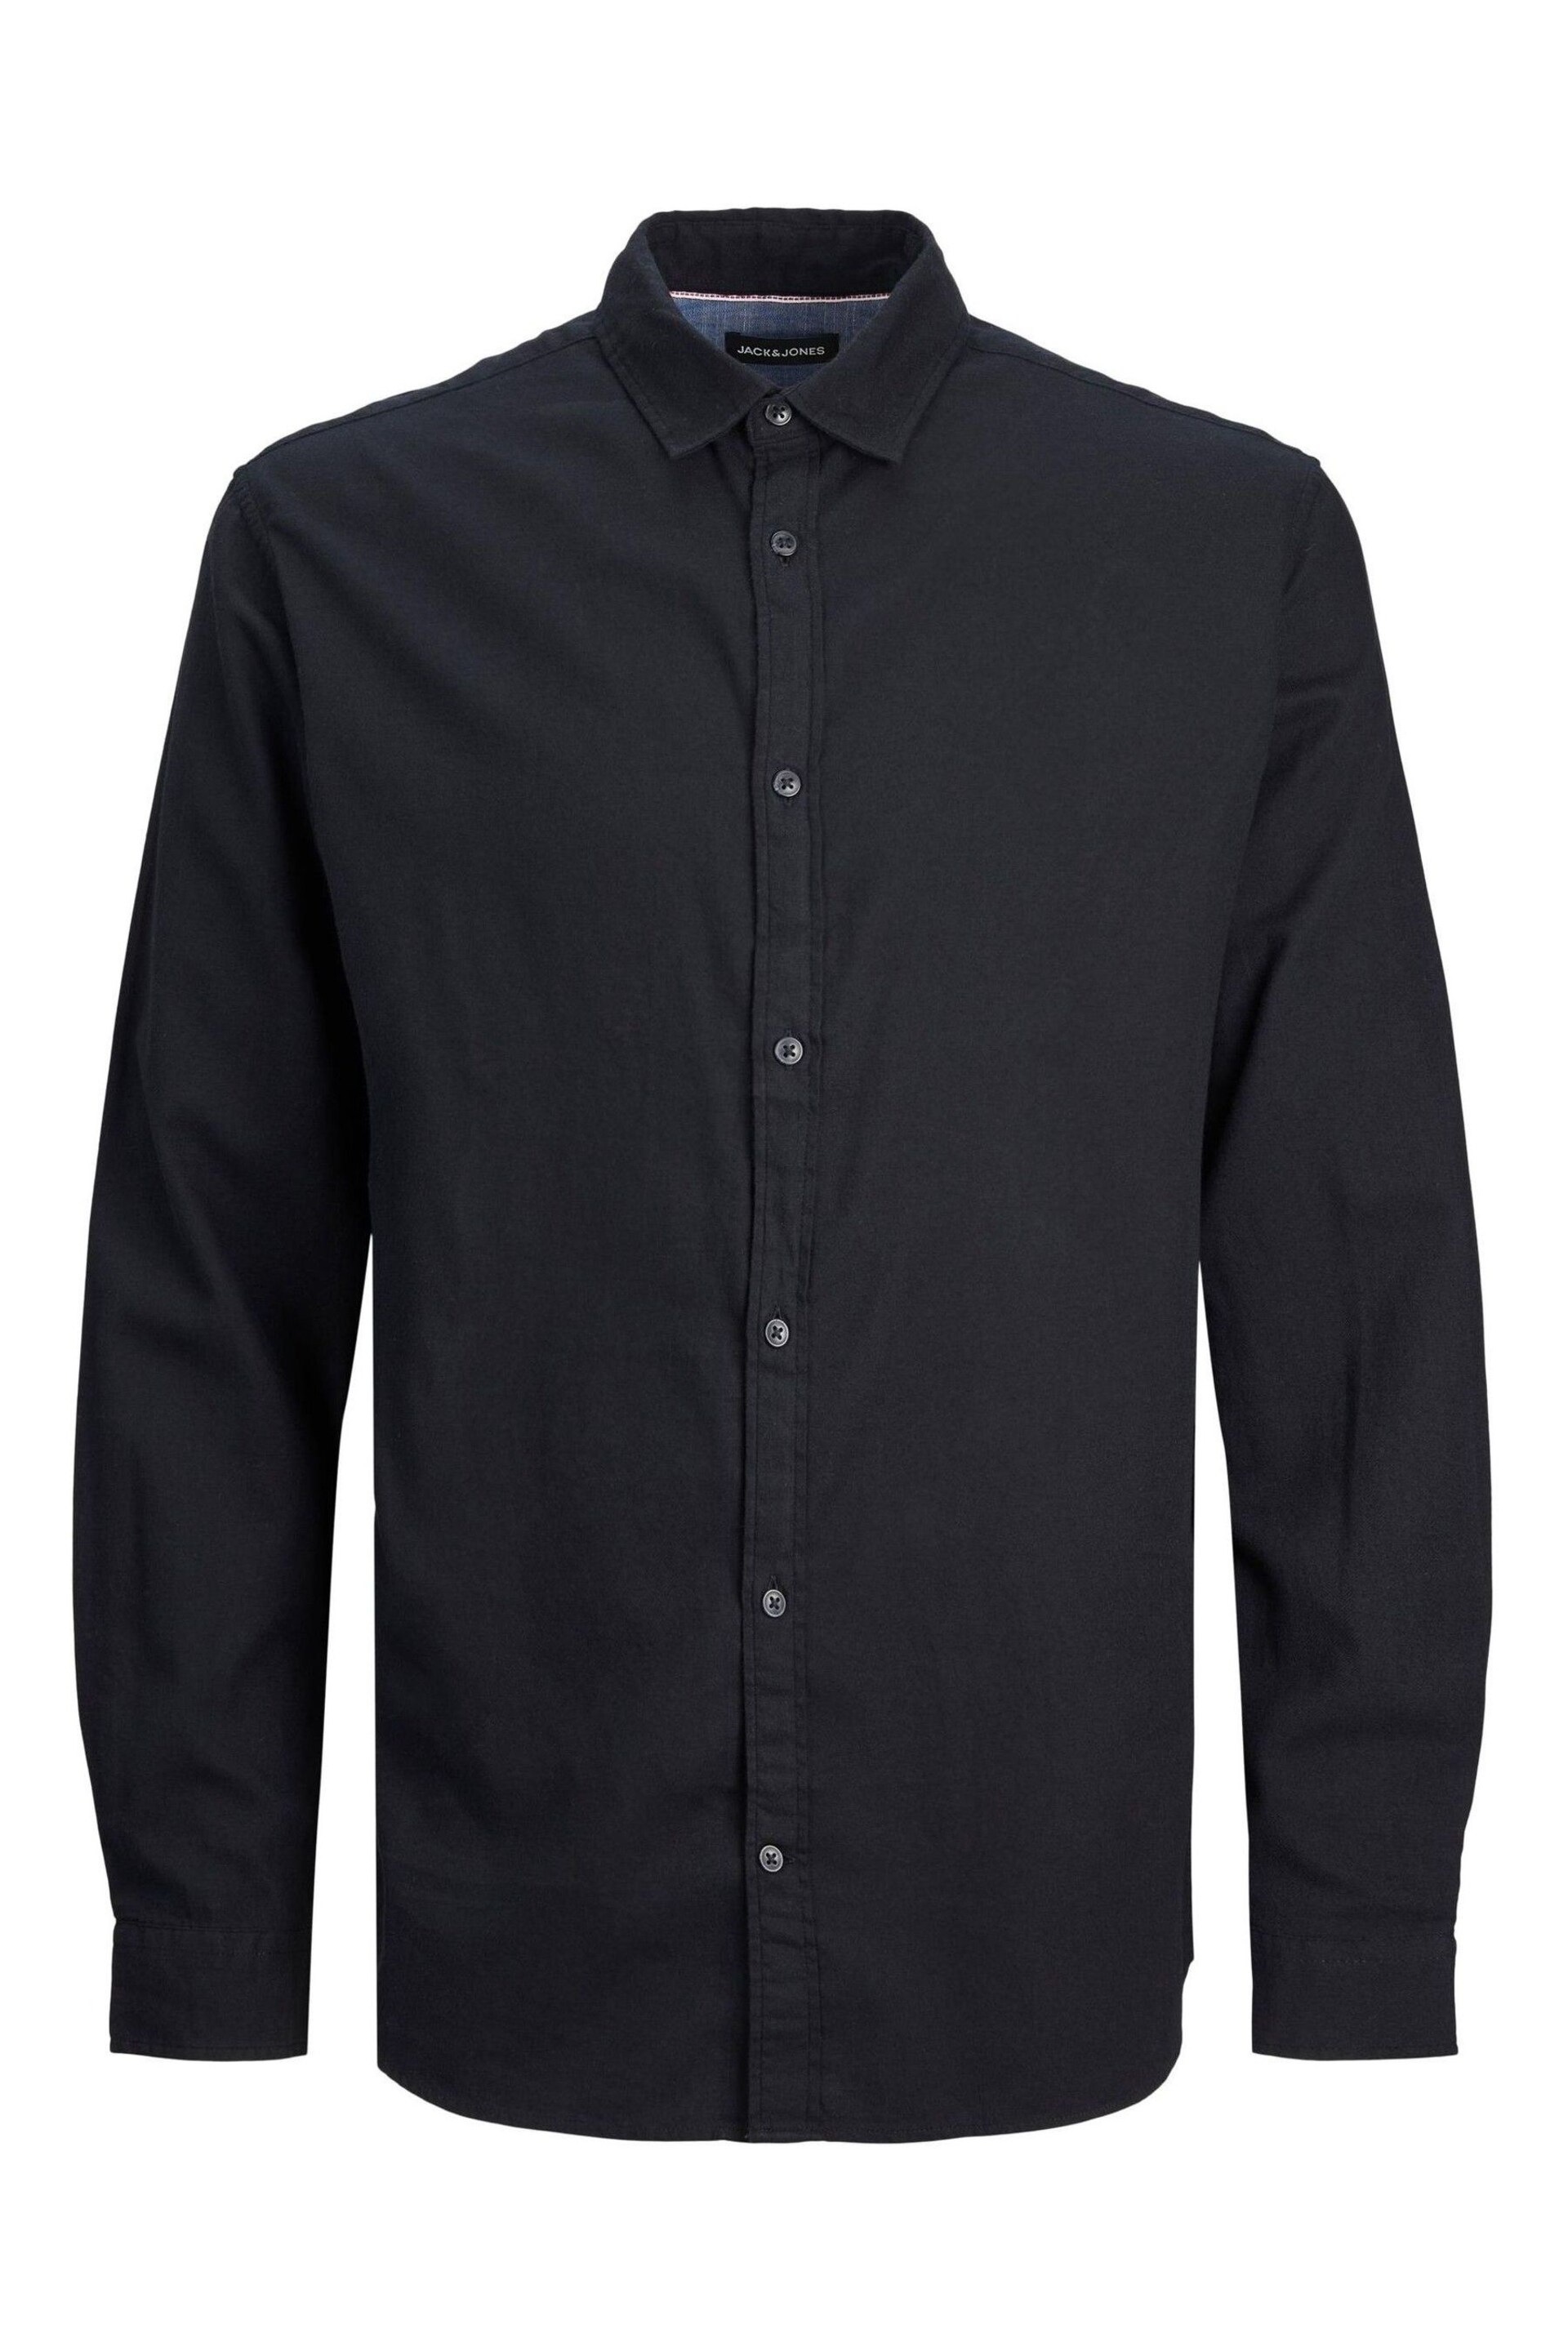 JACK & JONES Black Button Up Shirt - Image 7 of 7